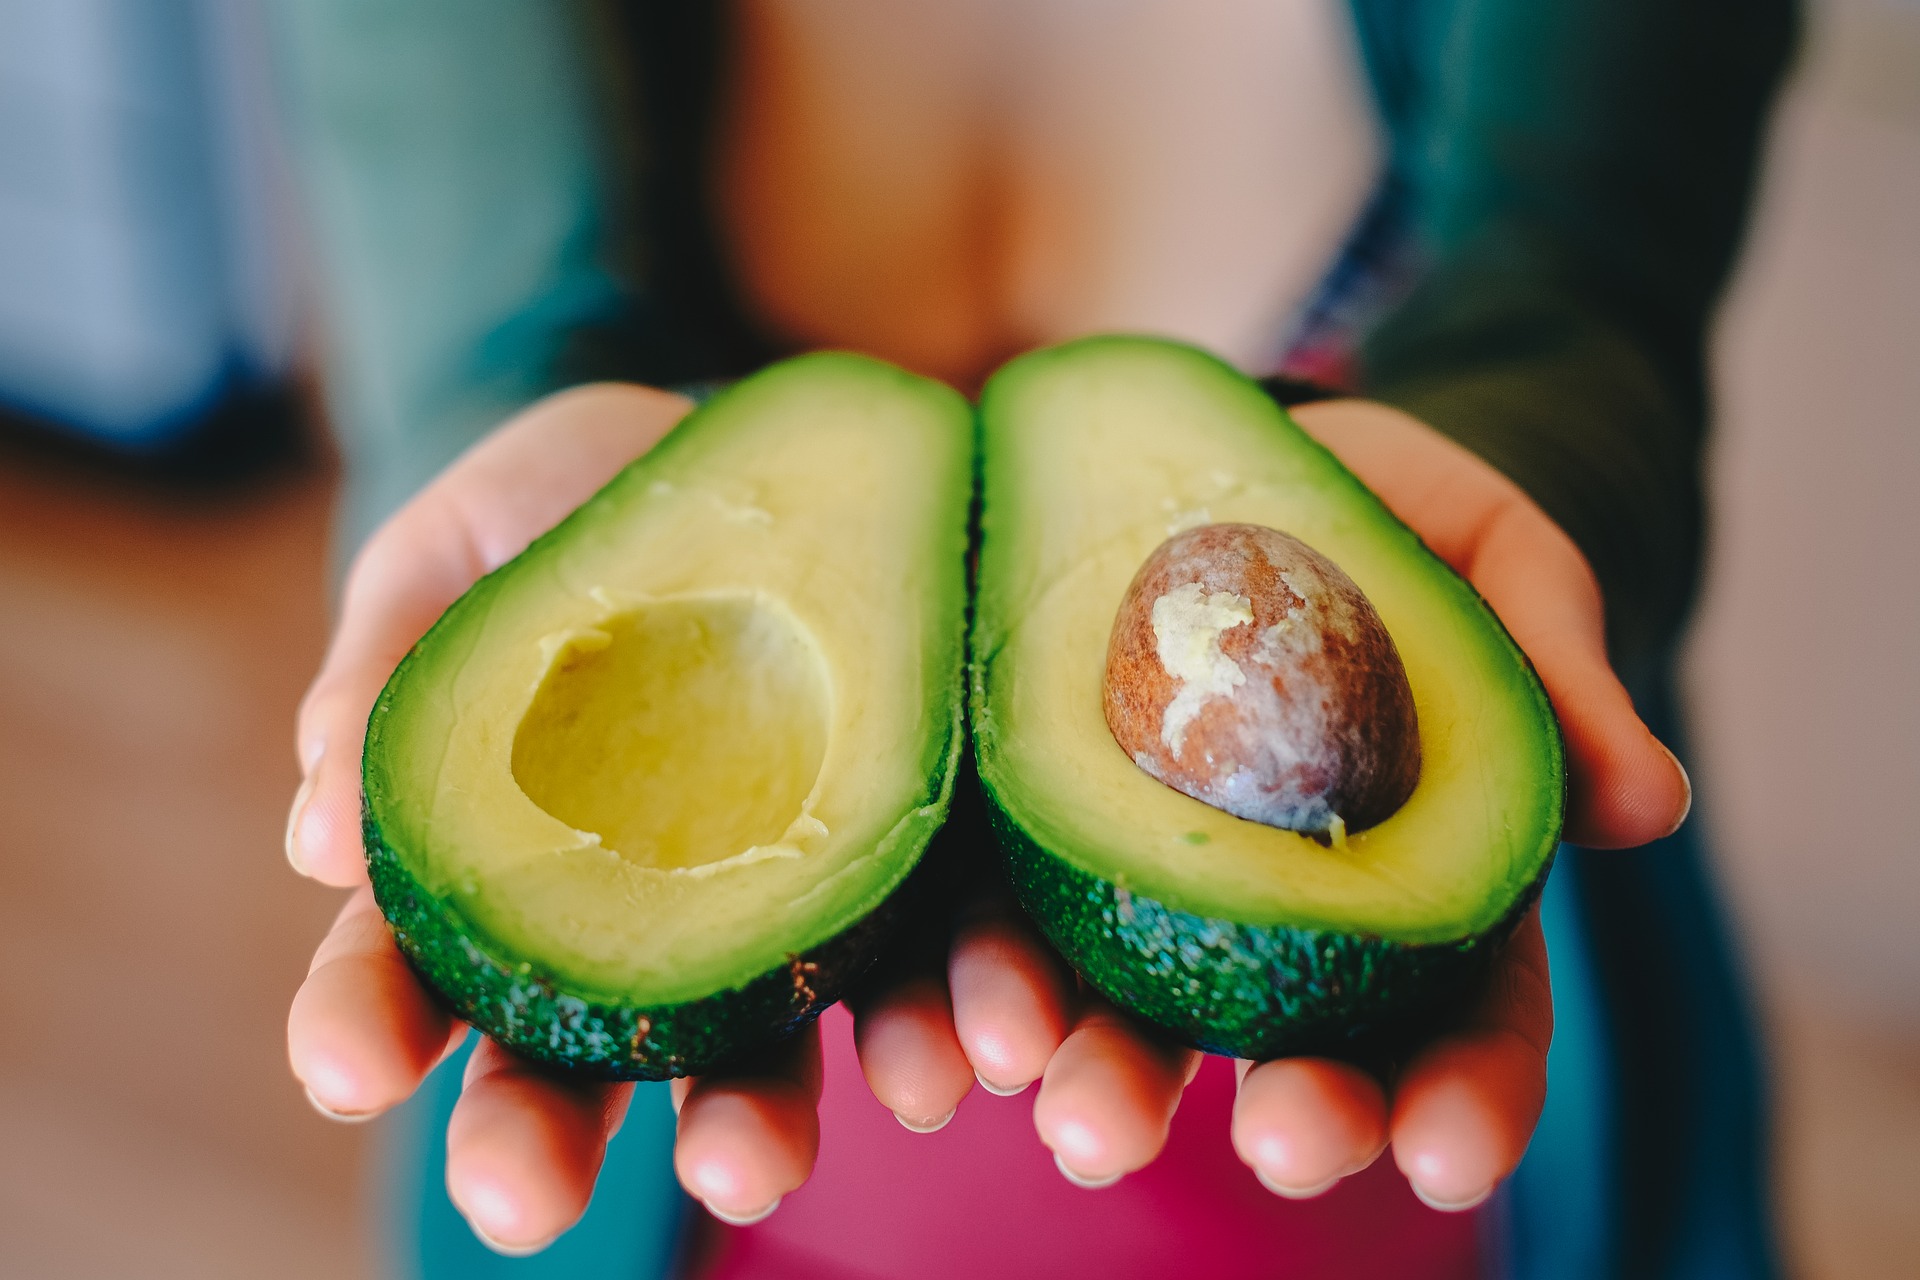 Anti-inflammatory properties of avocado seeds